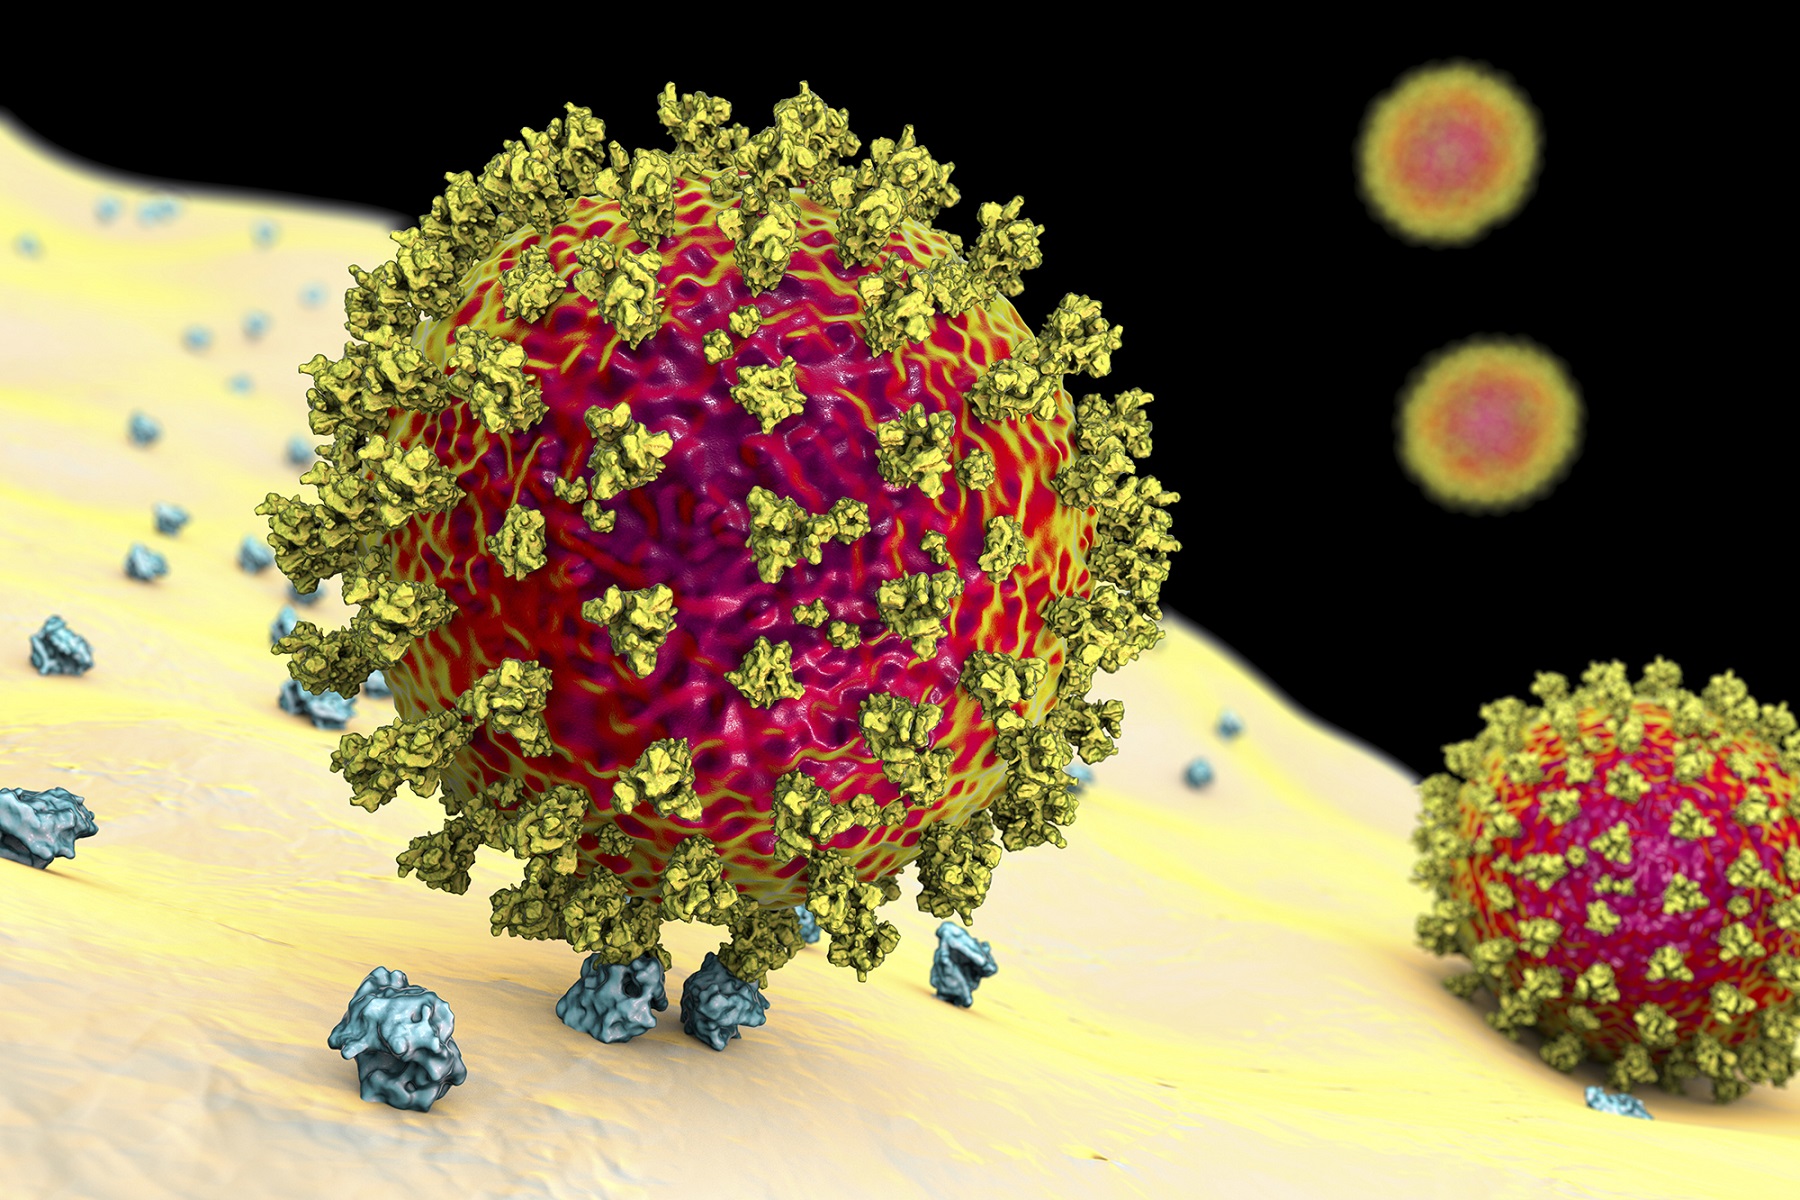 SARS-CoV-2 Μεταλλάξεις: Η ταυτόχρονη μόλυνση με δύο διαφορετικές παραλλαγές του ιού δεν επιδρά στη σοβαρότητα της νόσου